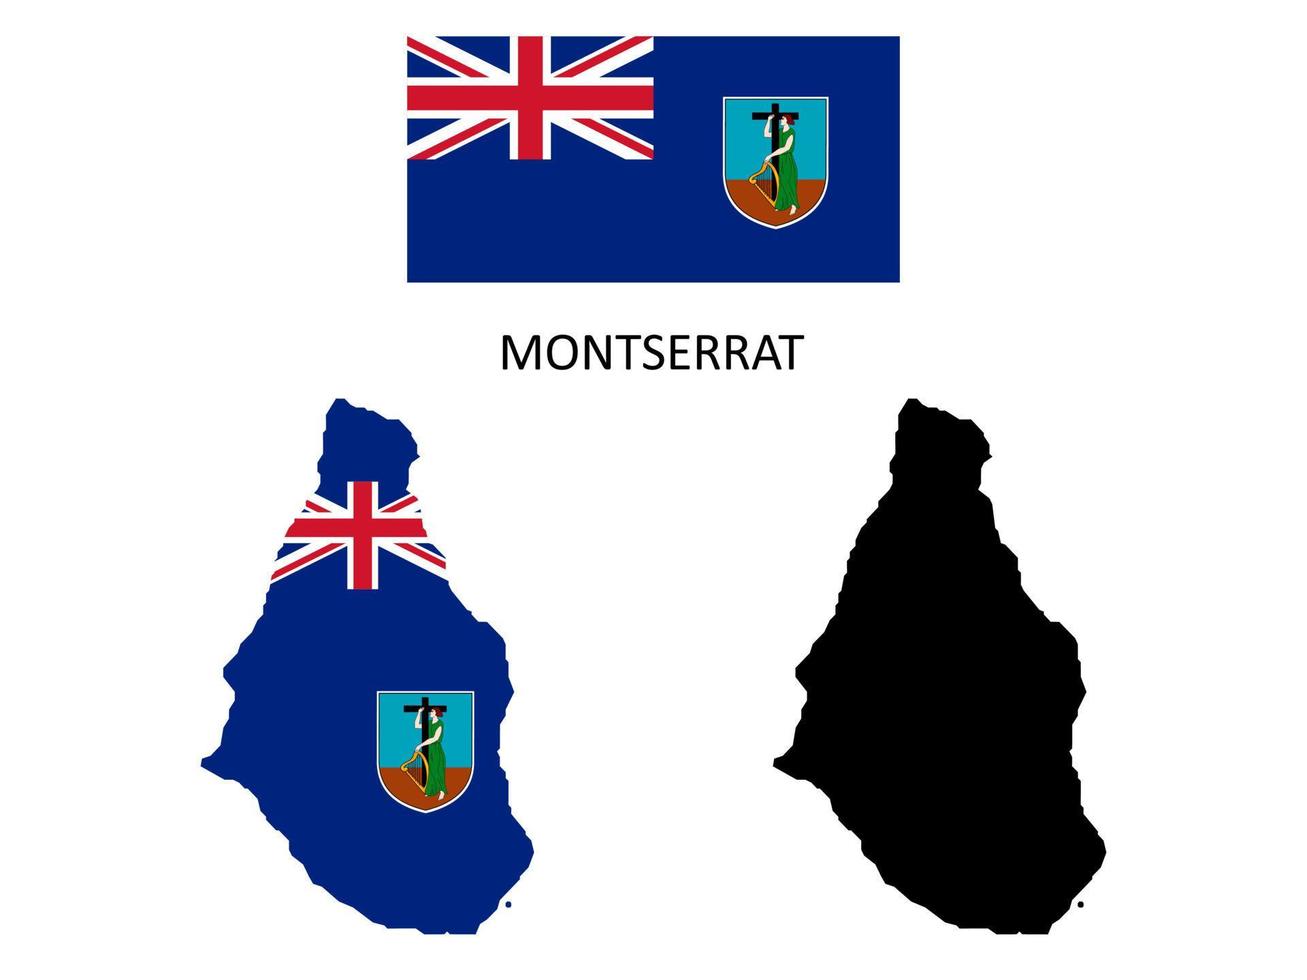 Monserrate bandeira e mapa ilustração vetor